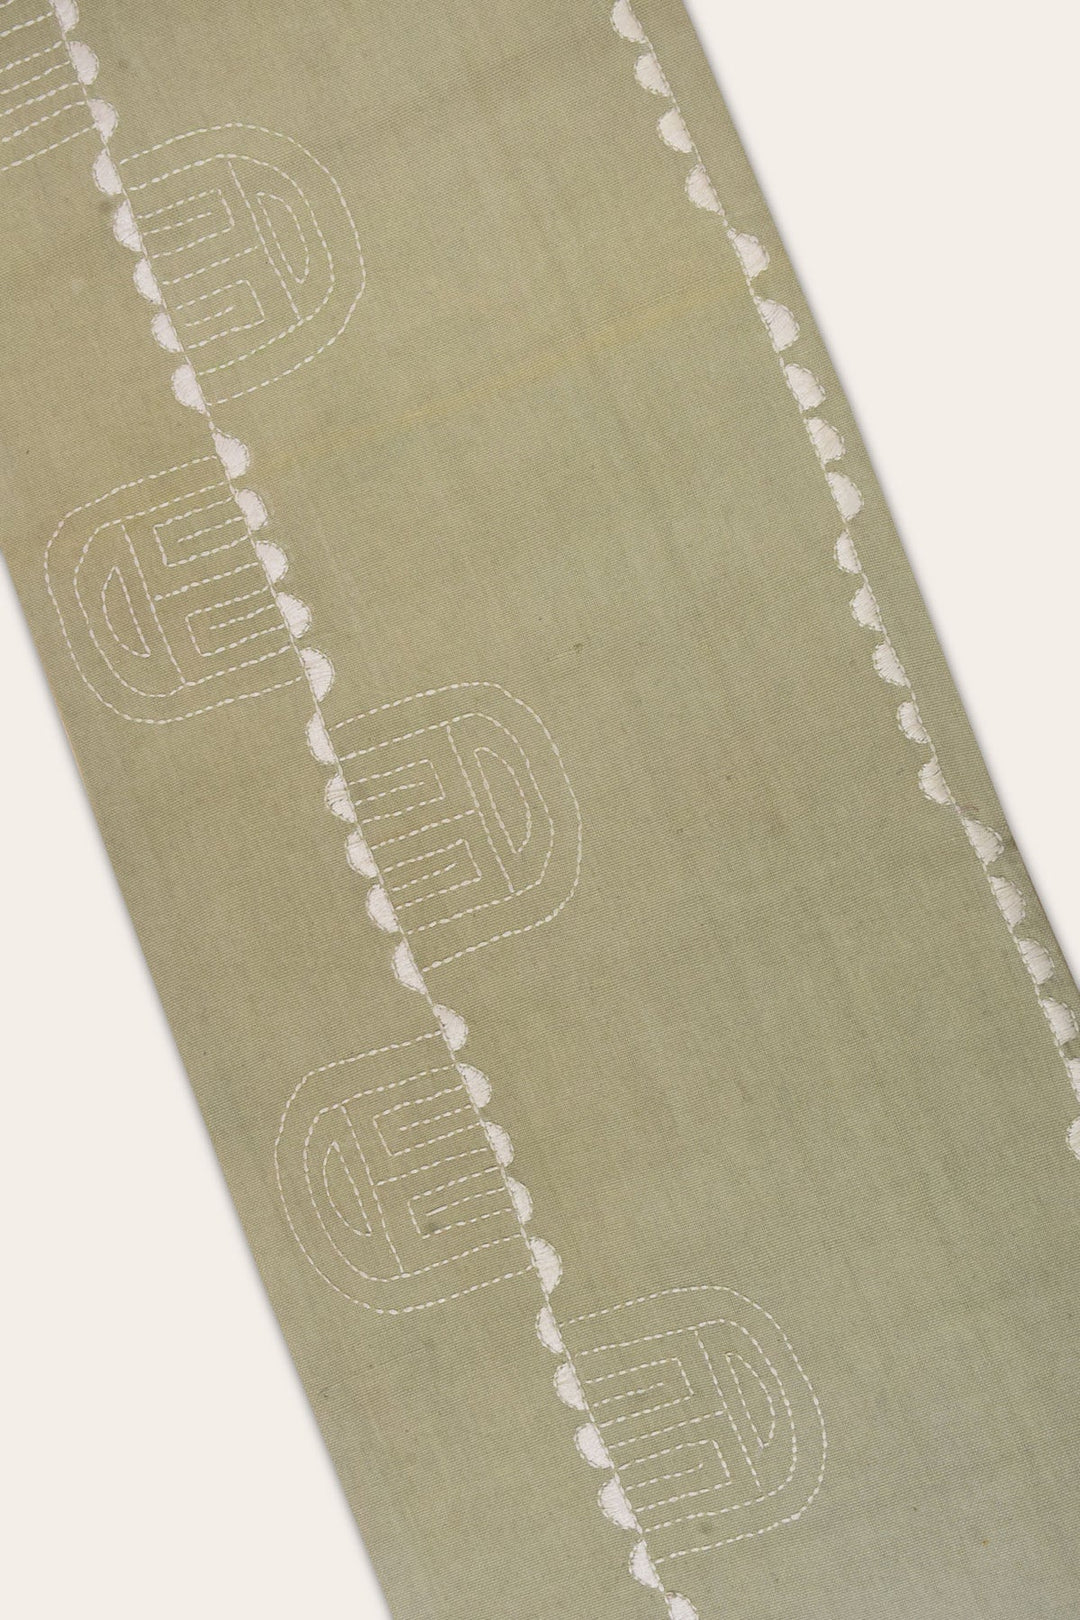 Tea Green Cotton Table Runner with Embroidered Maze Design | Felice - Handwoven Table Runner - Tea Green